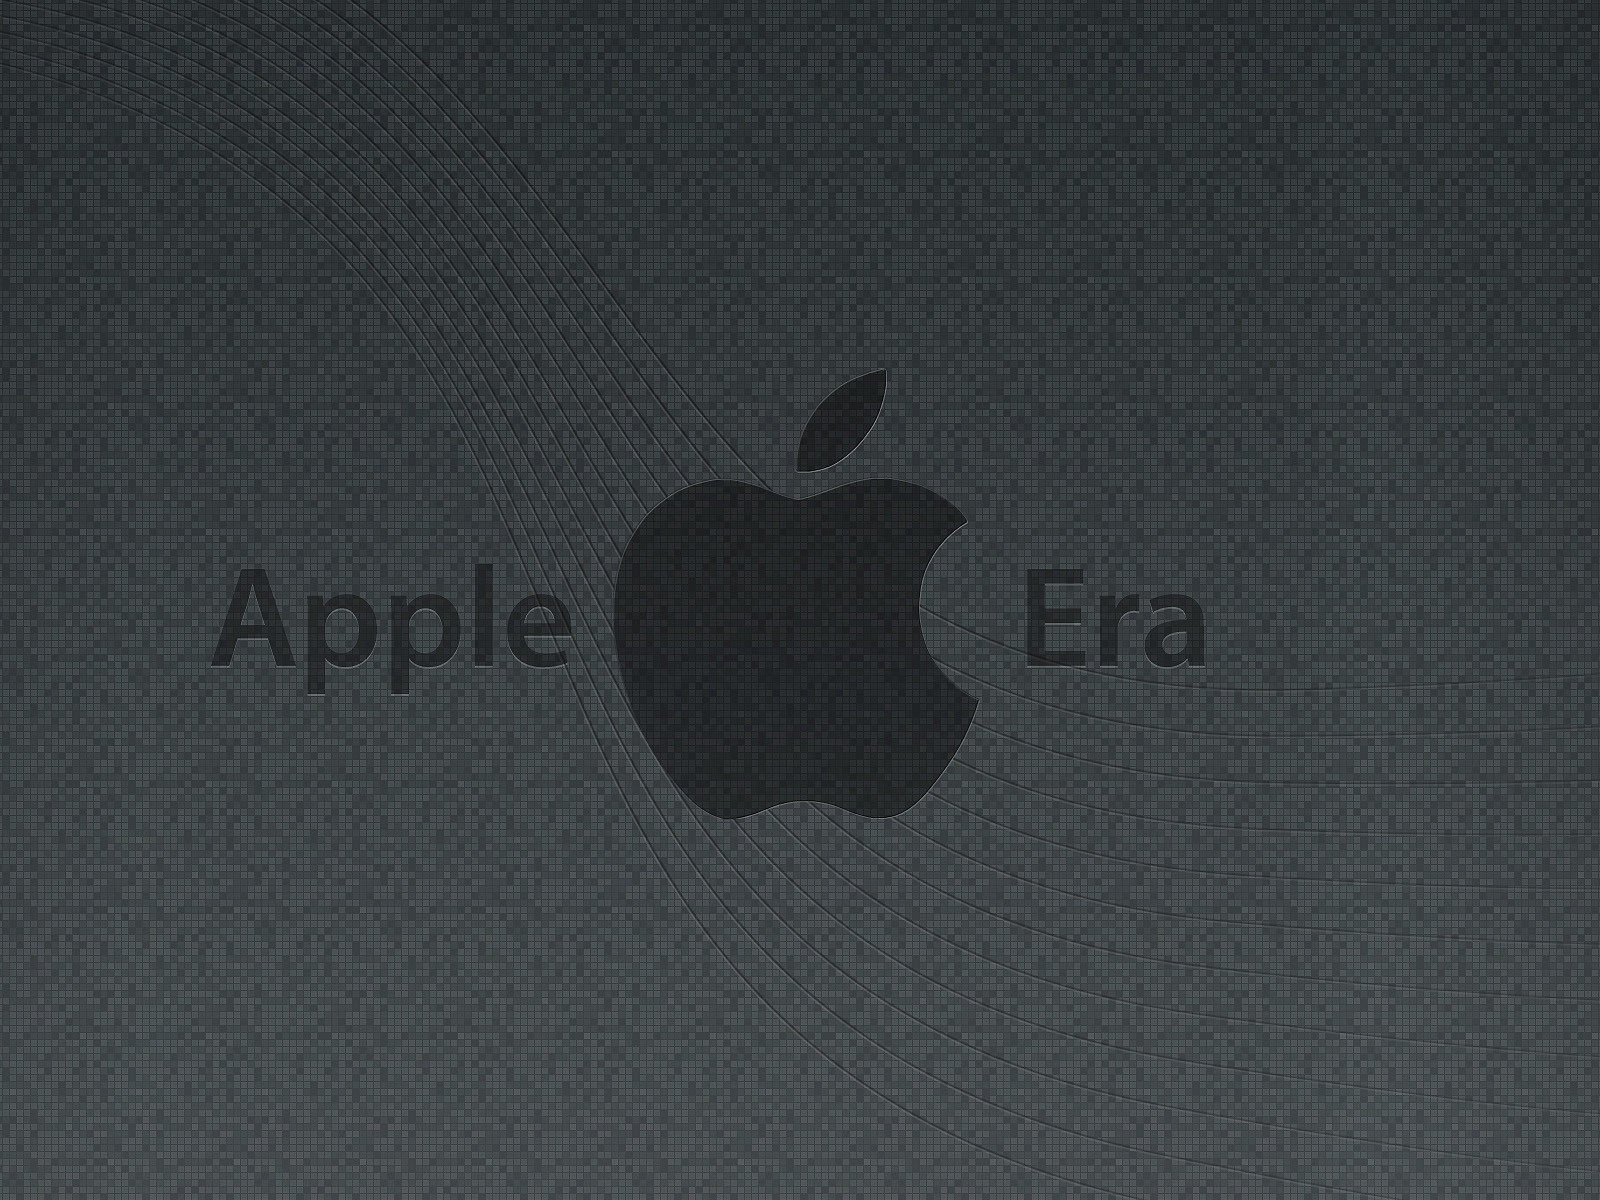 Apple Era for 1600 x 1200 resolution